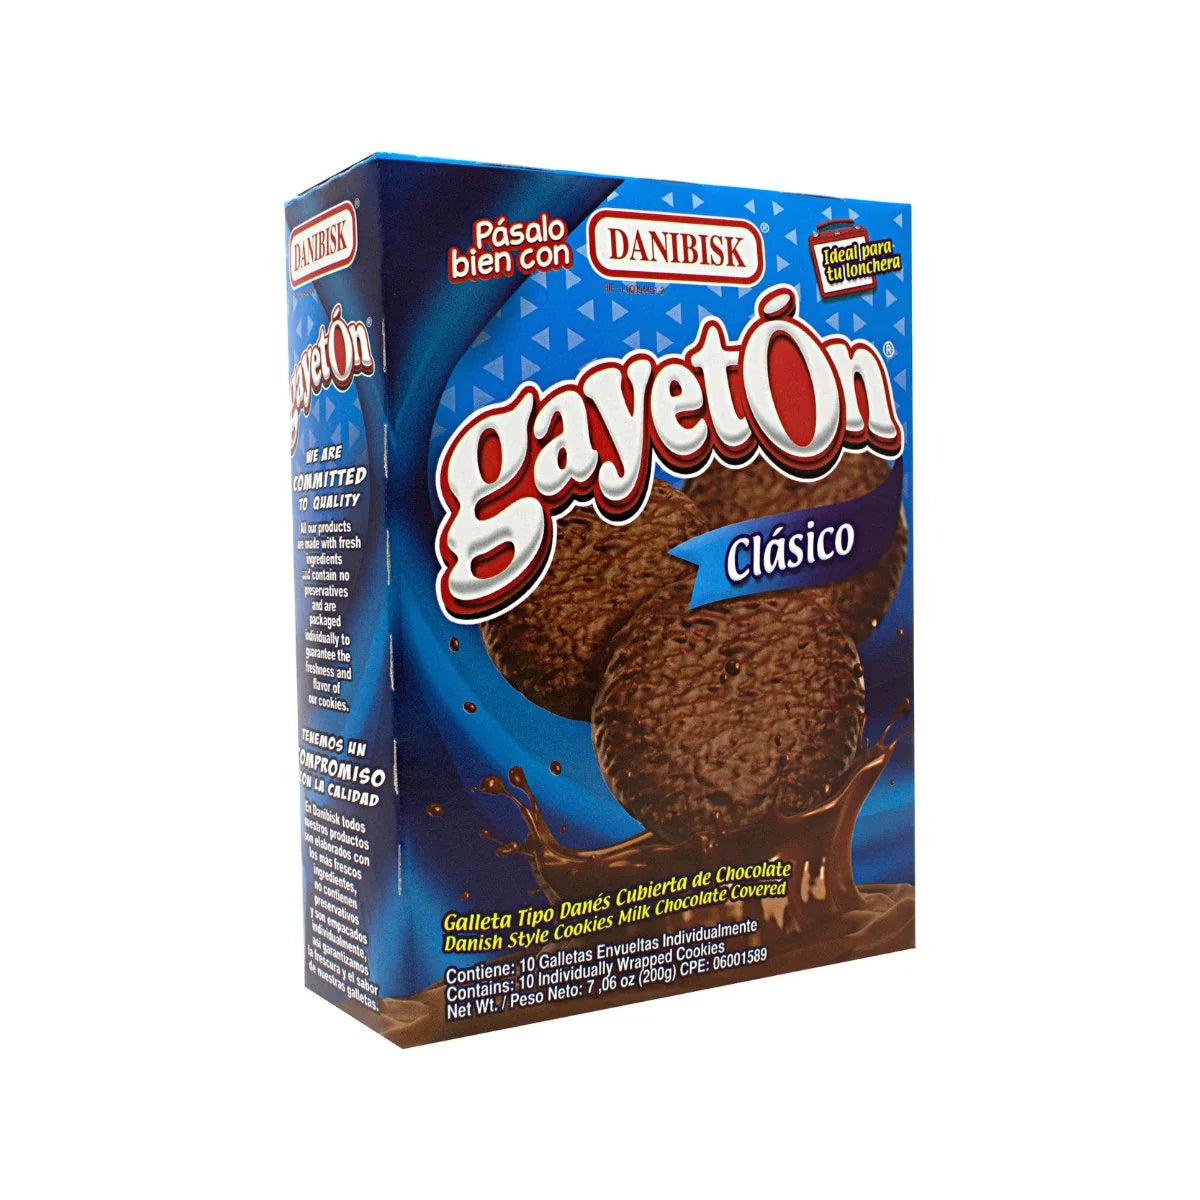 Danibisk Gayeton Clasico (Chocolate-Covered Cookies) - 7 oz / 200 g